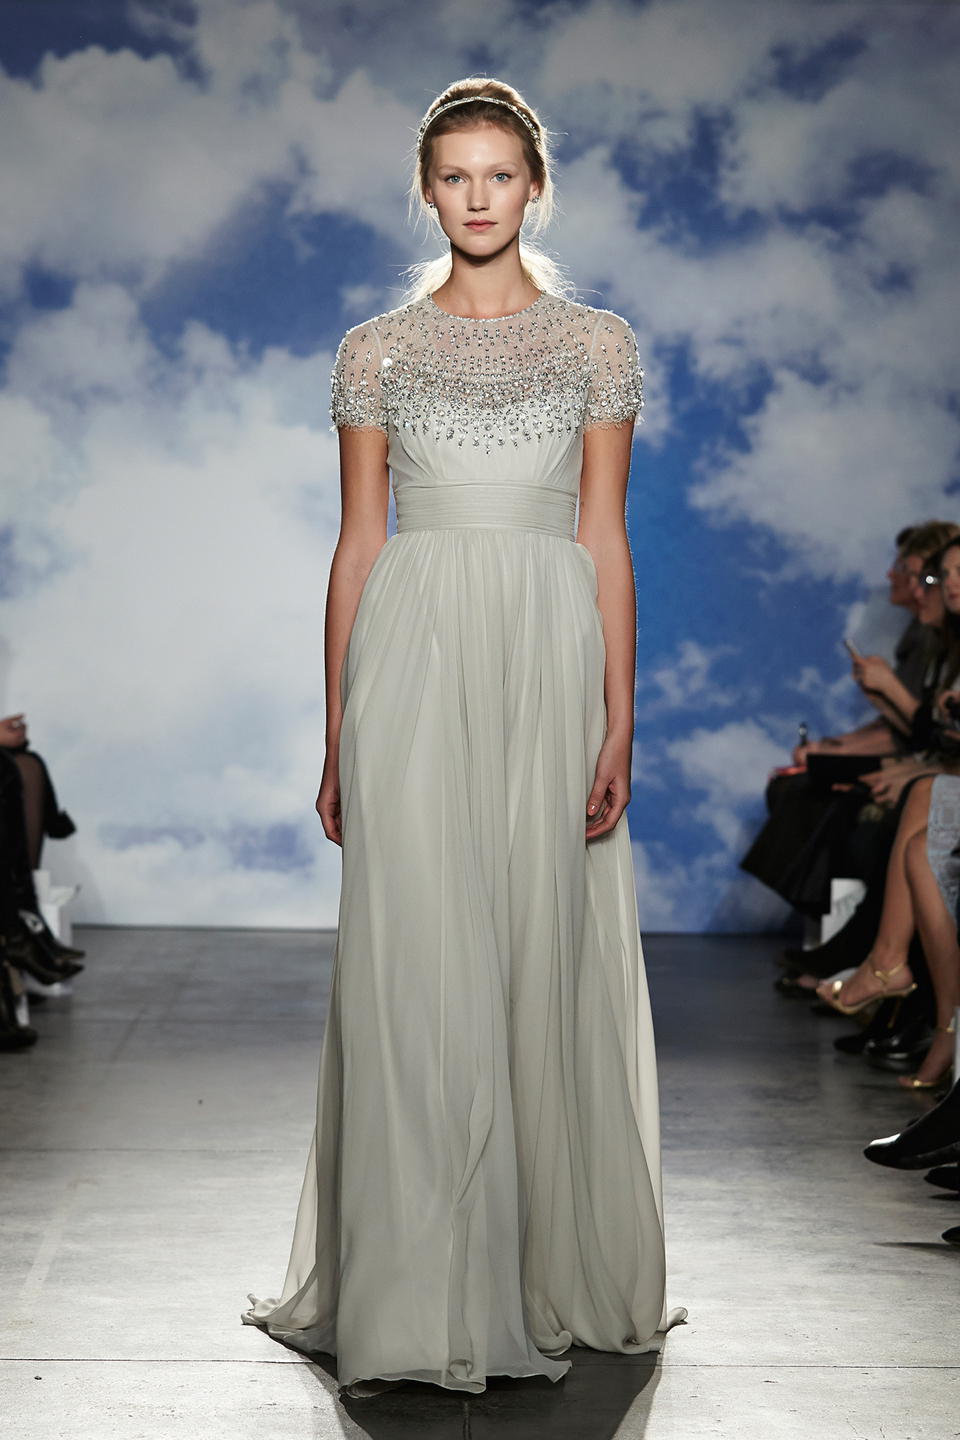 Jenny Packham 2015 Bridal Wear Collection, as showecased at New York Bridal Market, April 2014